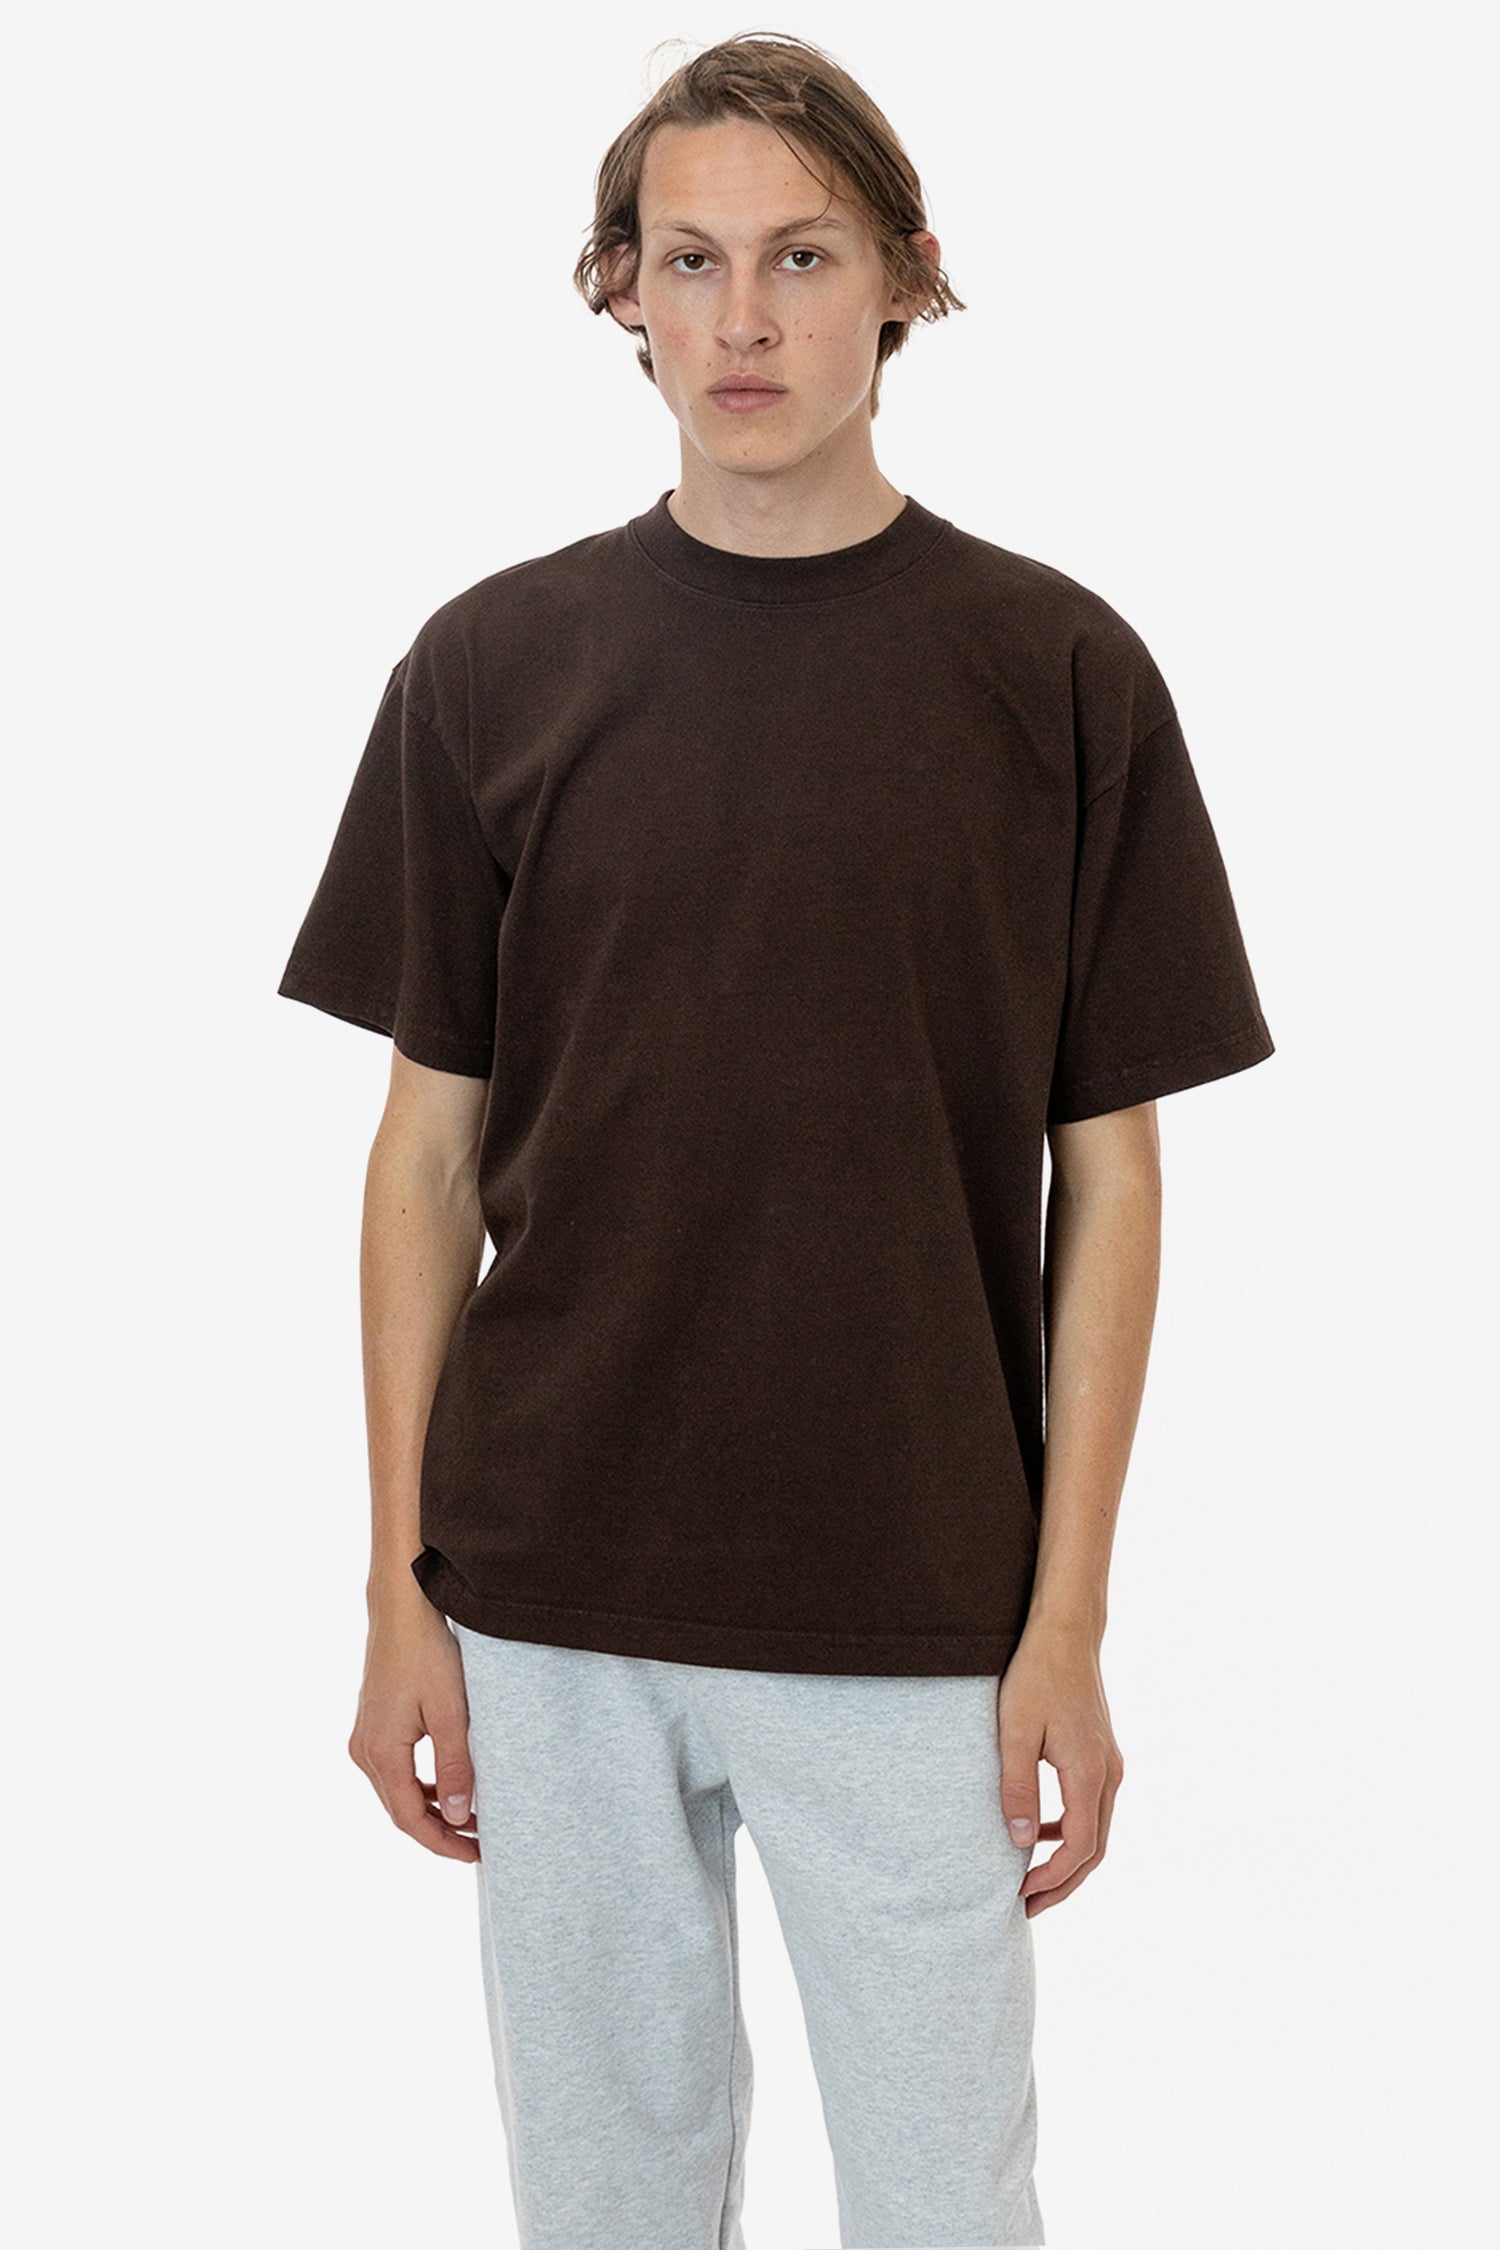 Los Angeles Apparel | The 1801 | Garment Dye Crew Neck T-Short Sleeve Shirt in Spectra Yellow, Size Medium